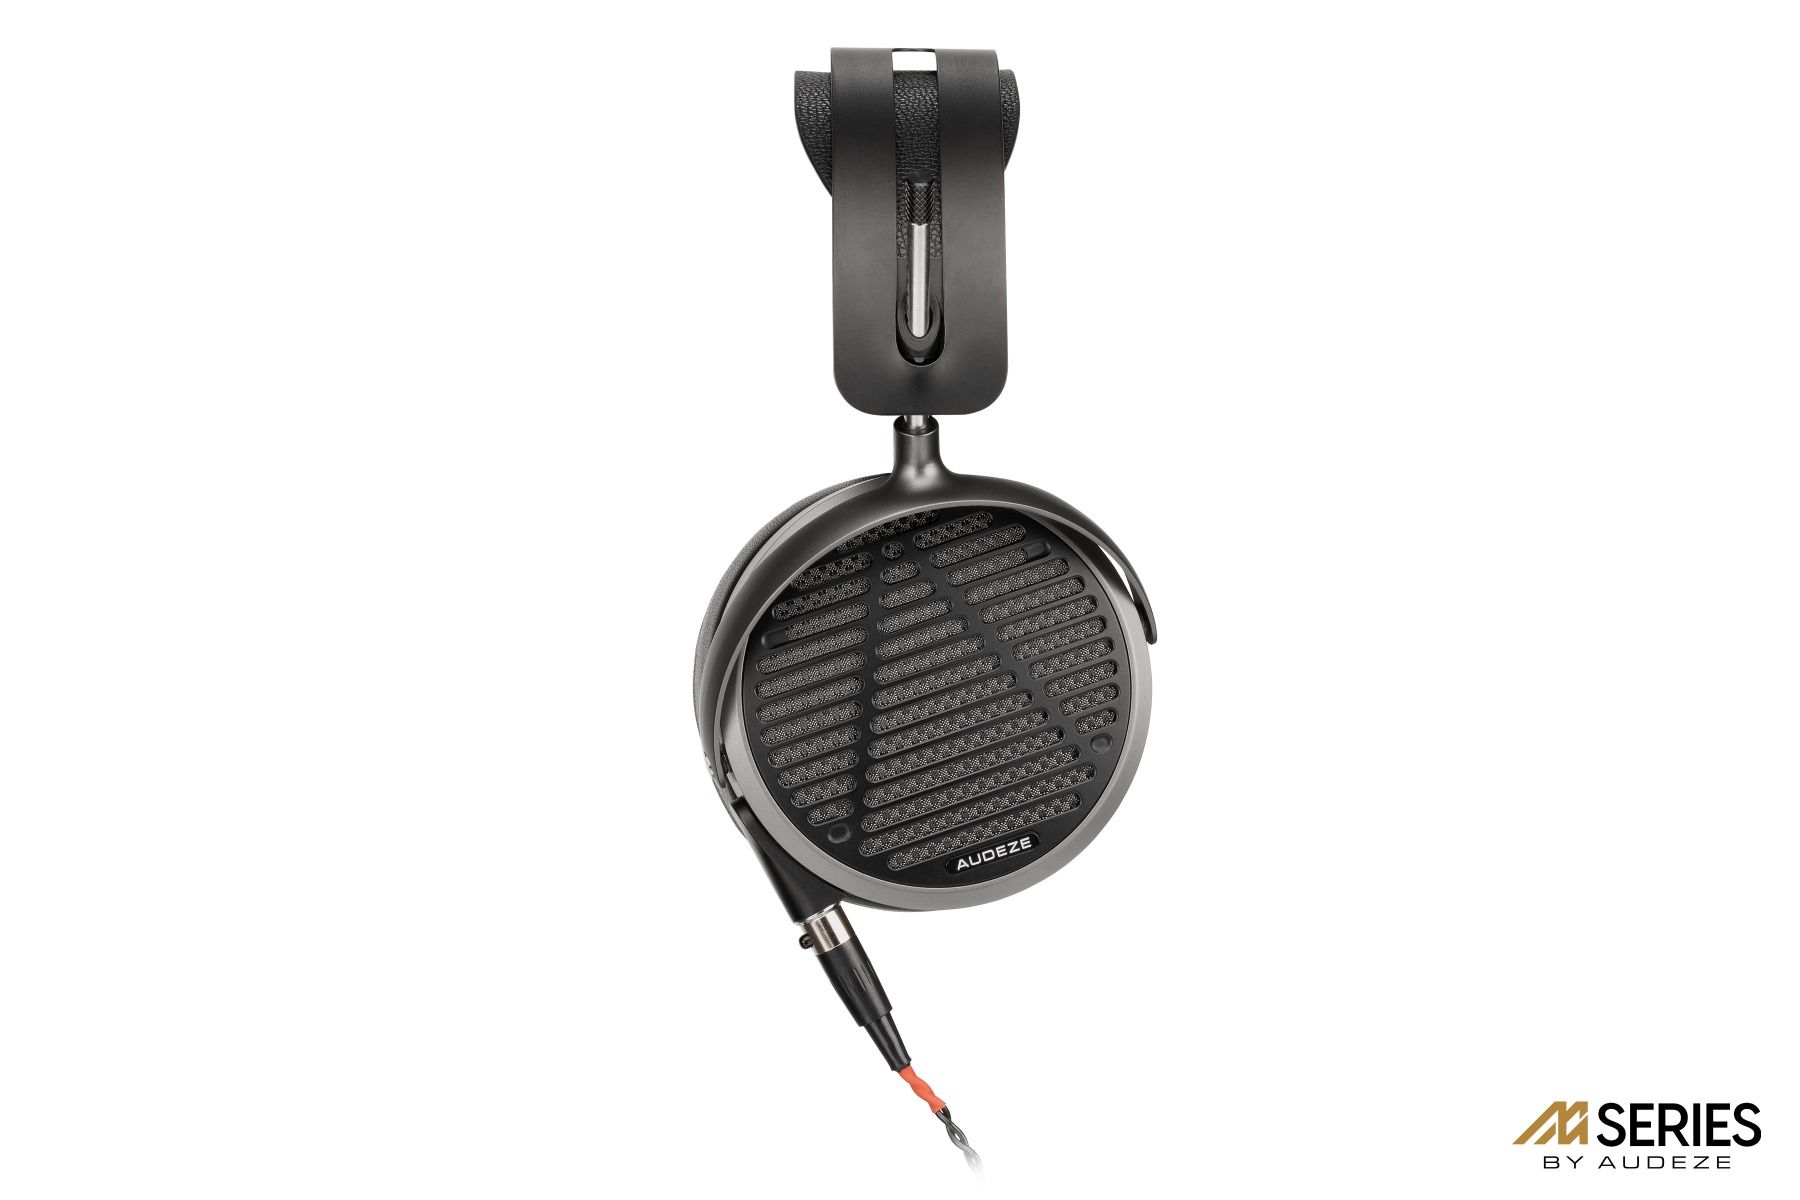 Side view of Audeze MM-500 Open-back Planar Magnetic Over-ear headphones in black color.